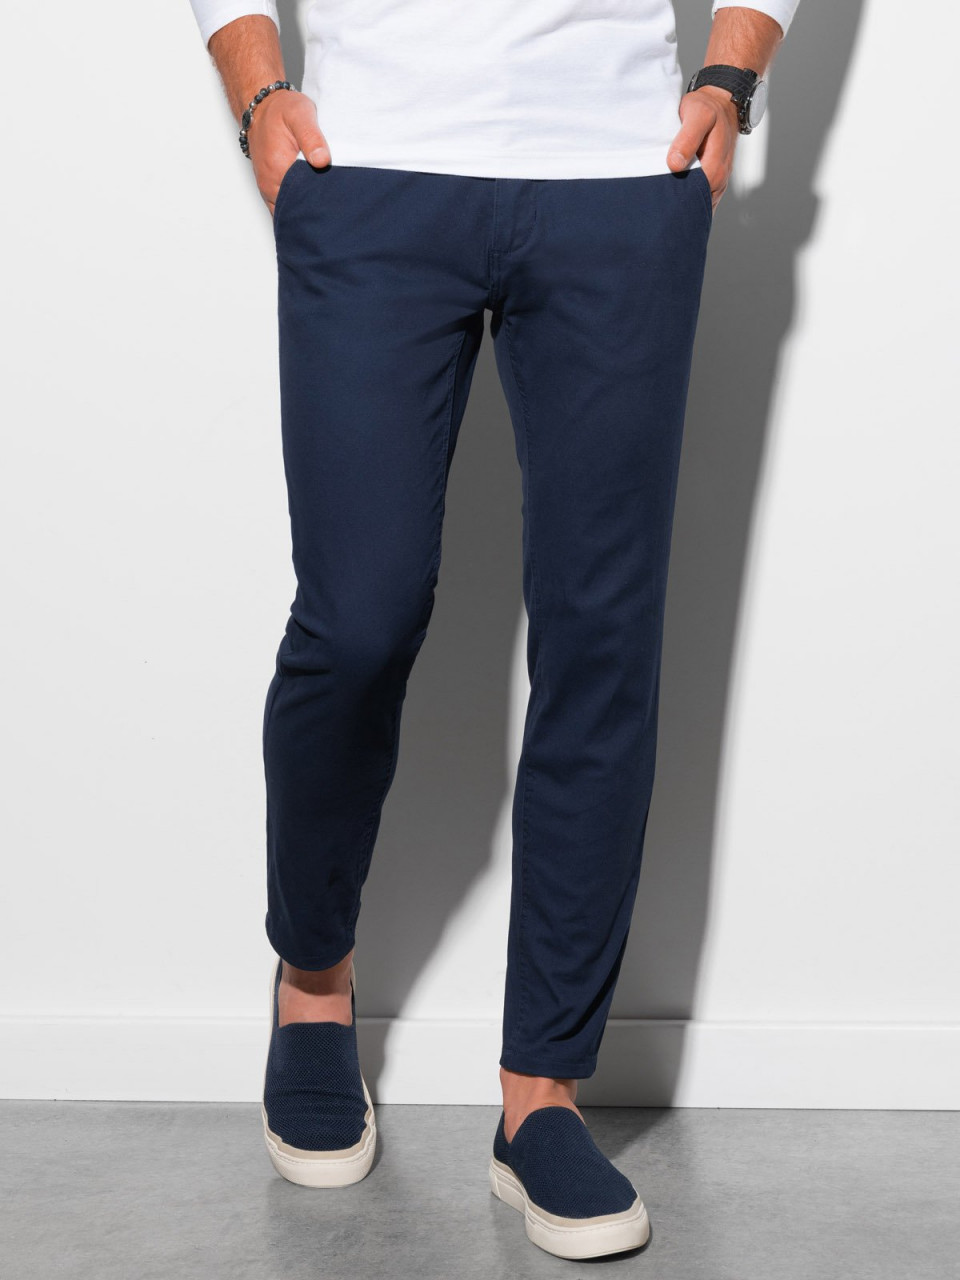 axe Denmark equilibrium Pantaloni barbati, casual, slim fit P156-bleumarin